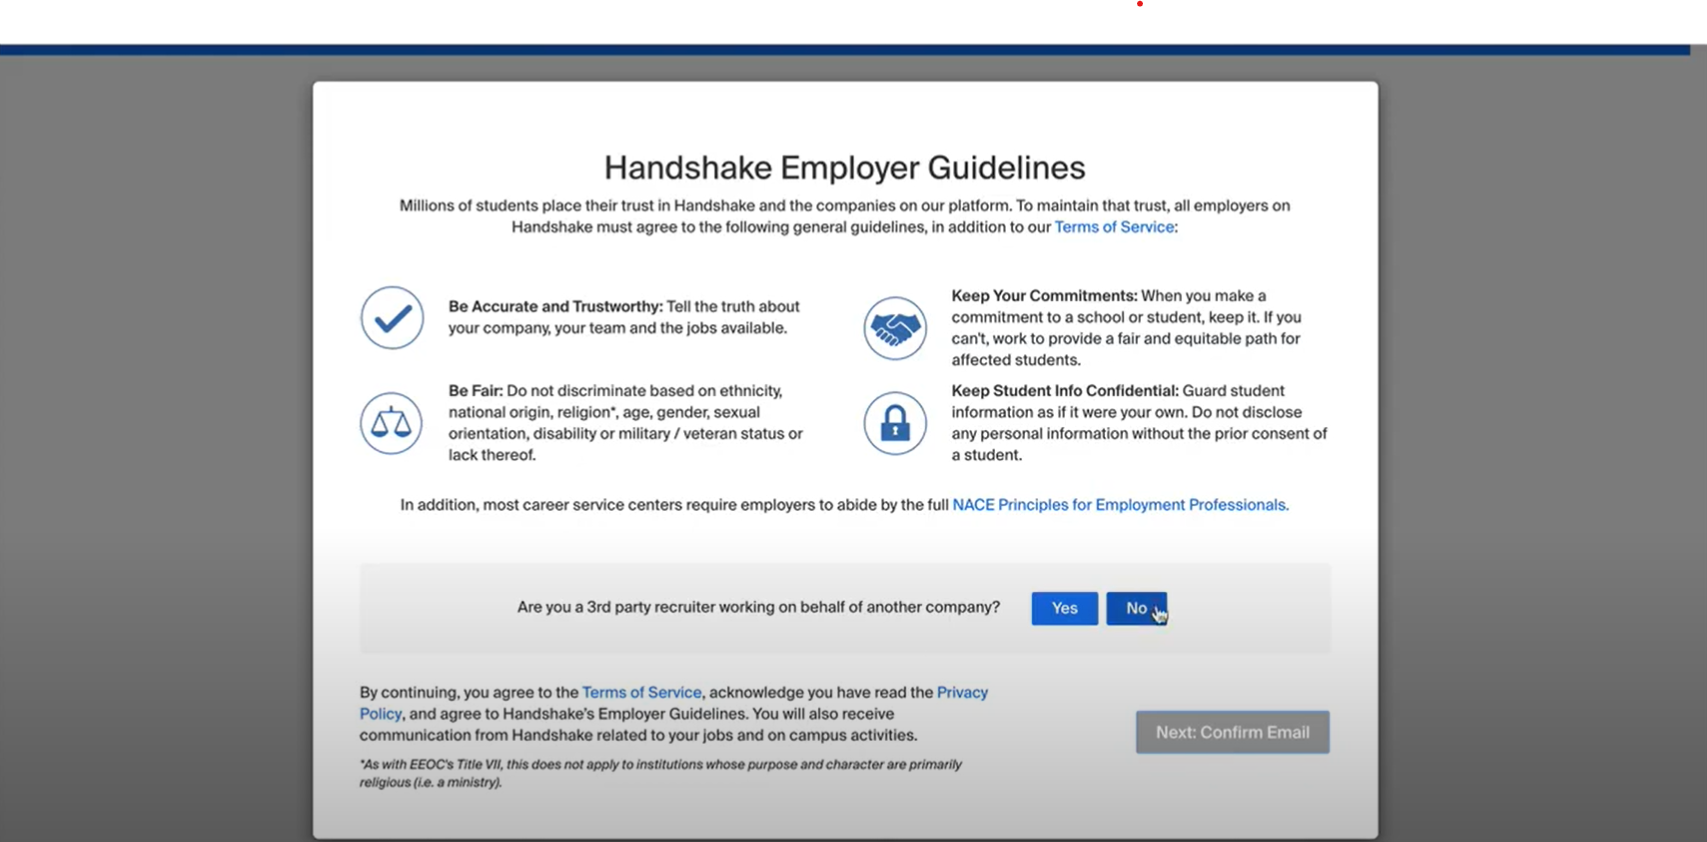 Handshake employer guidelines